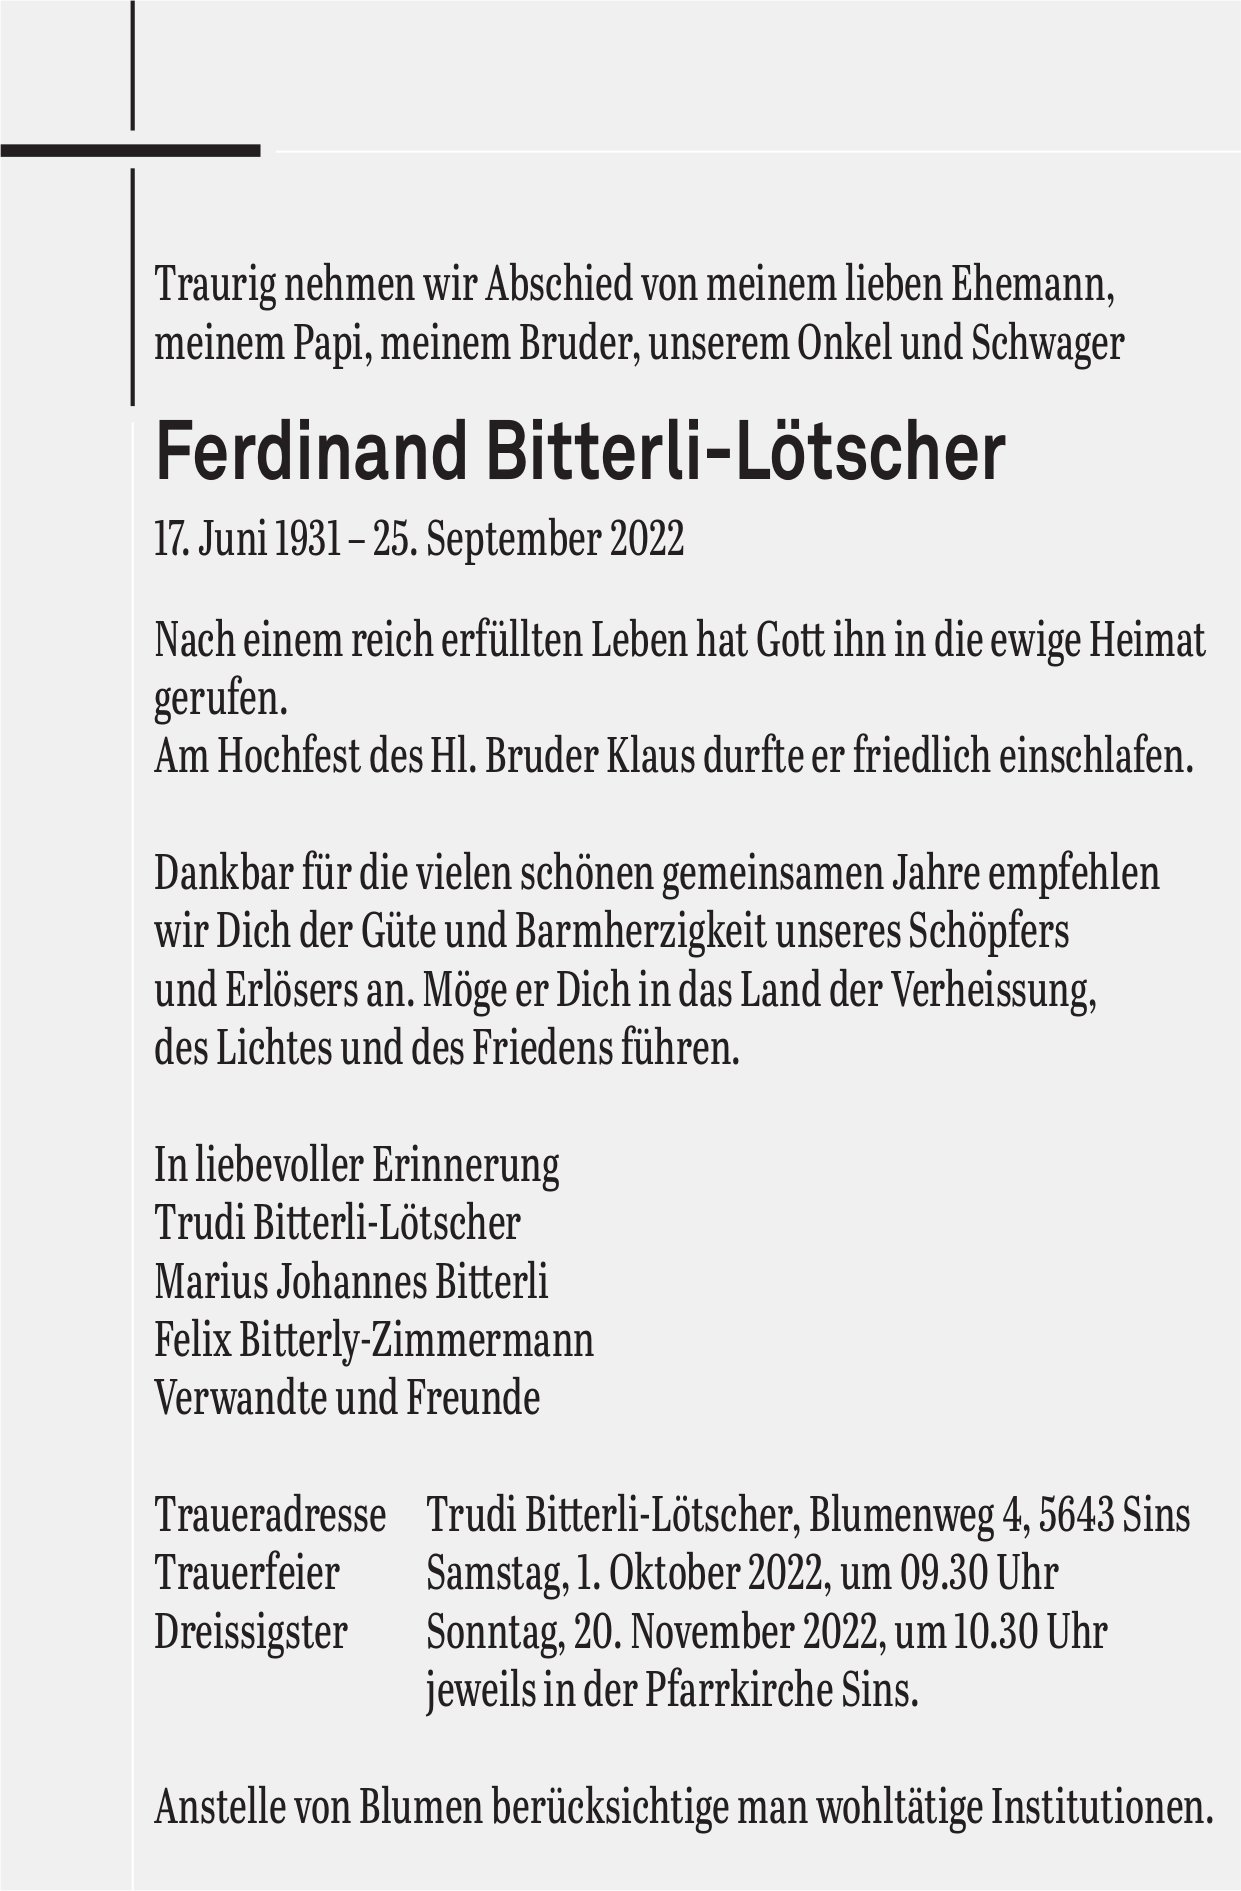 Bitterli-Lötscher Ferdinand, September 2022 / TA